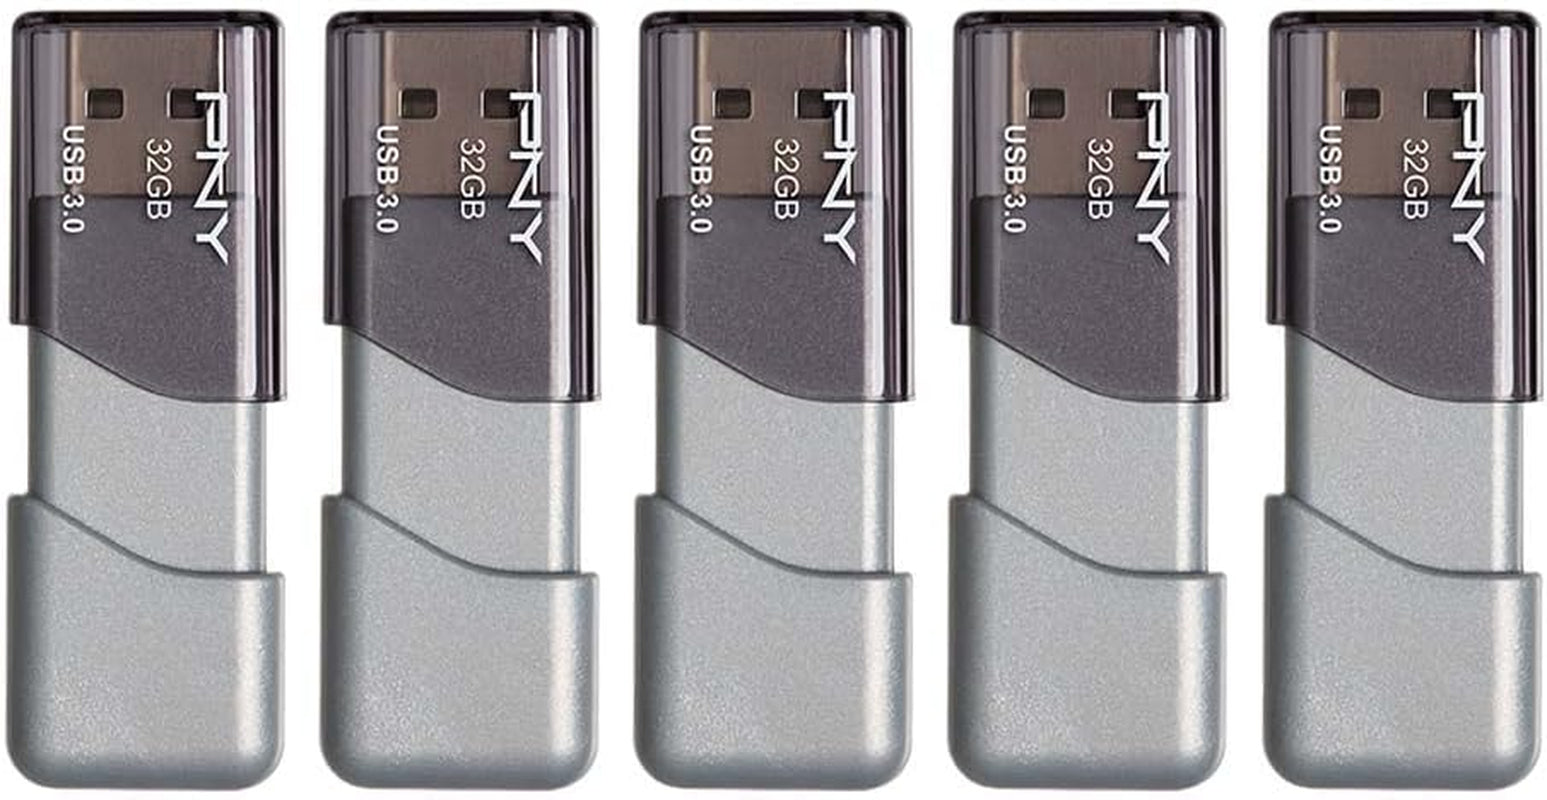 64GB Turbo Attaché 3 USB 3.0 Flash Drive 5-Pack, Silver